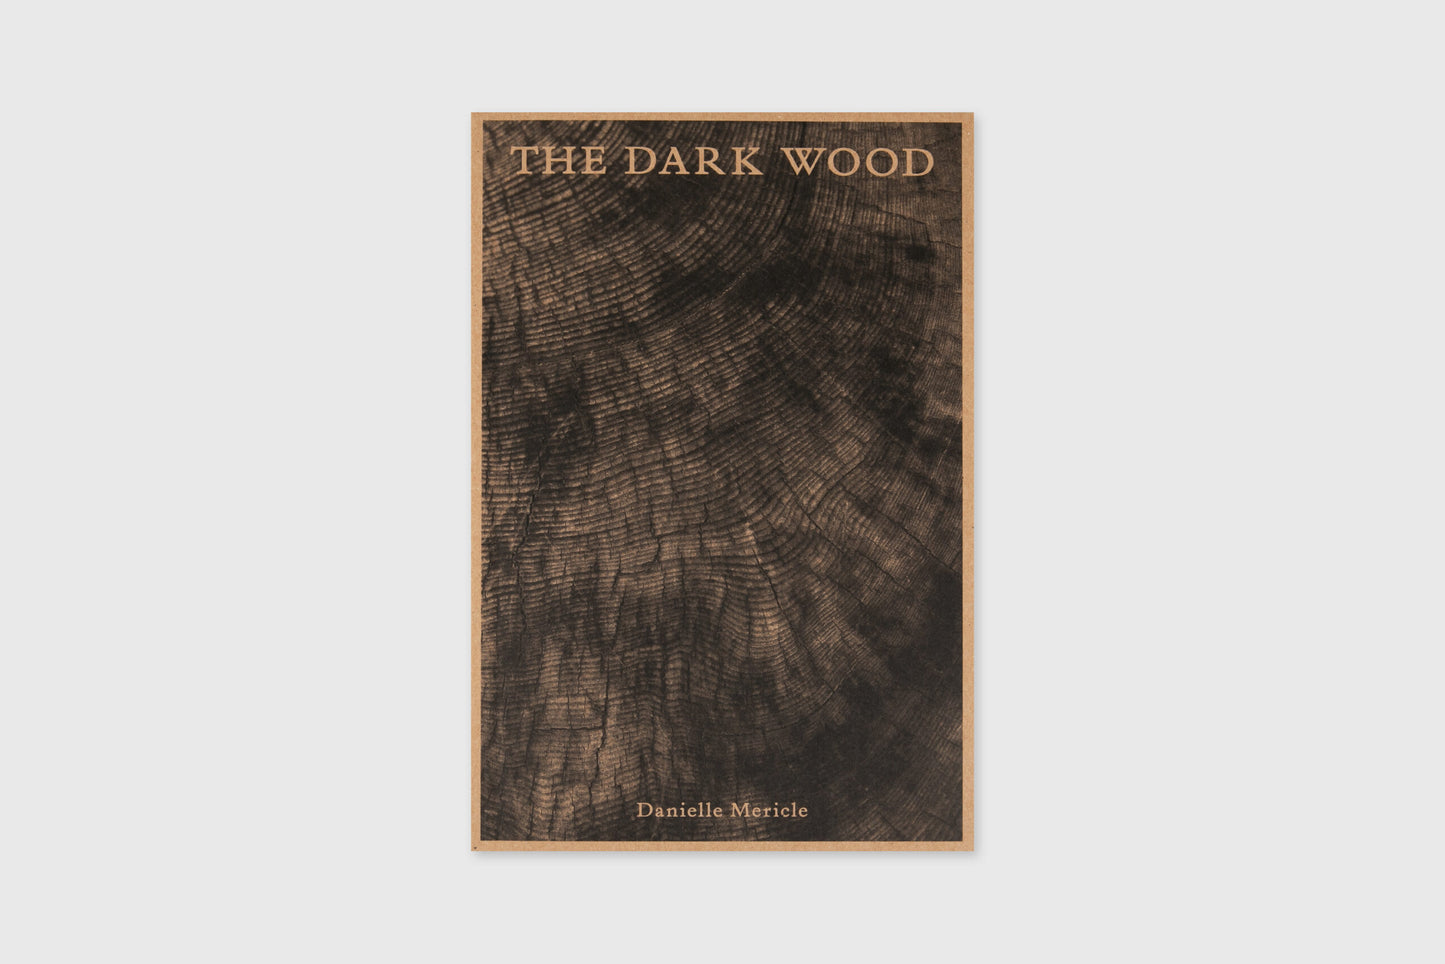 The Dark Wood